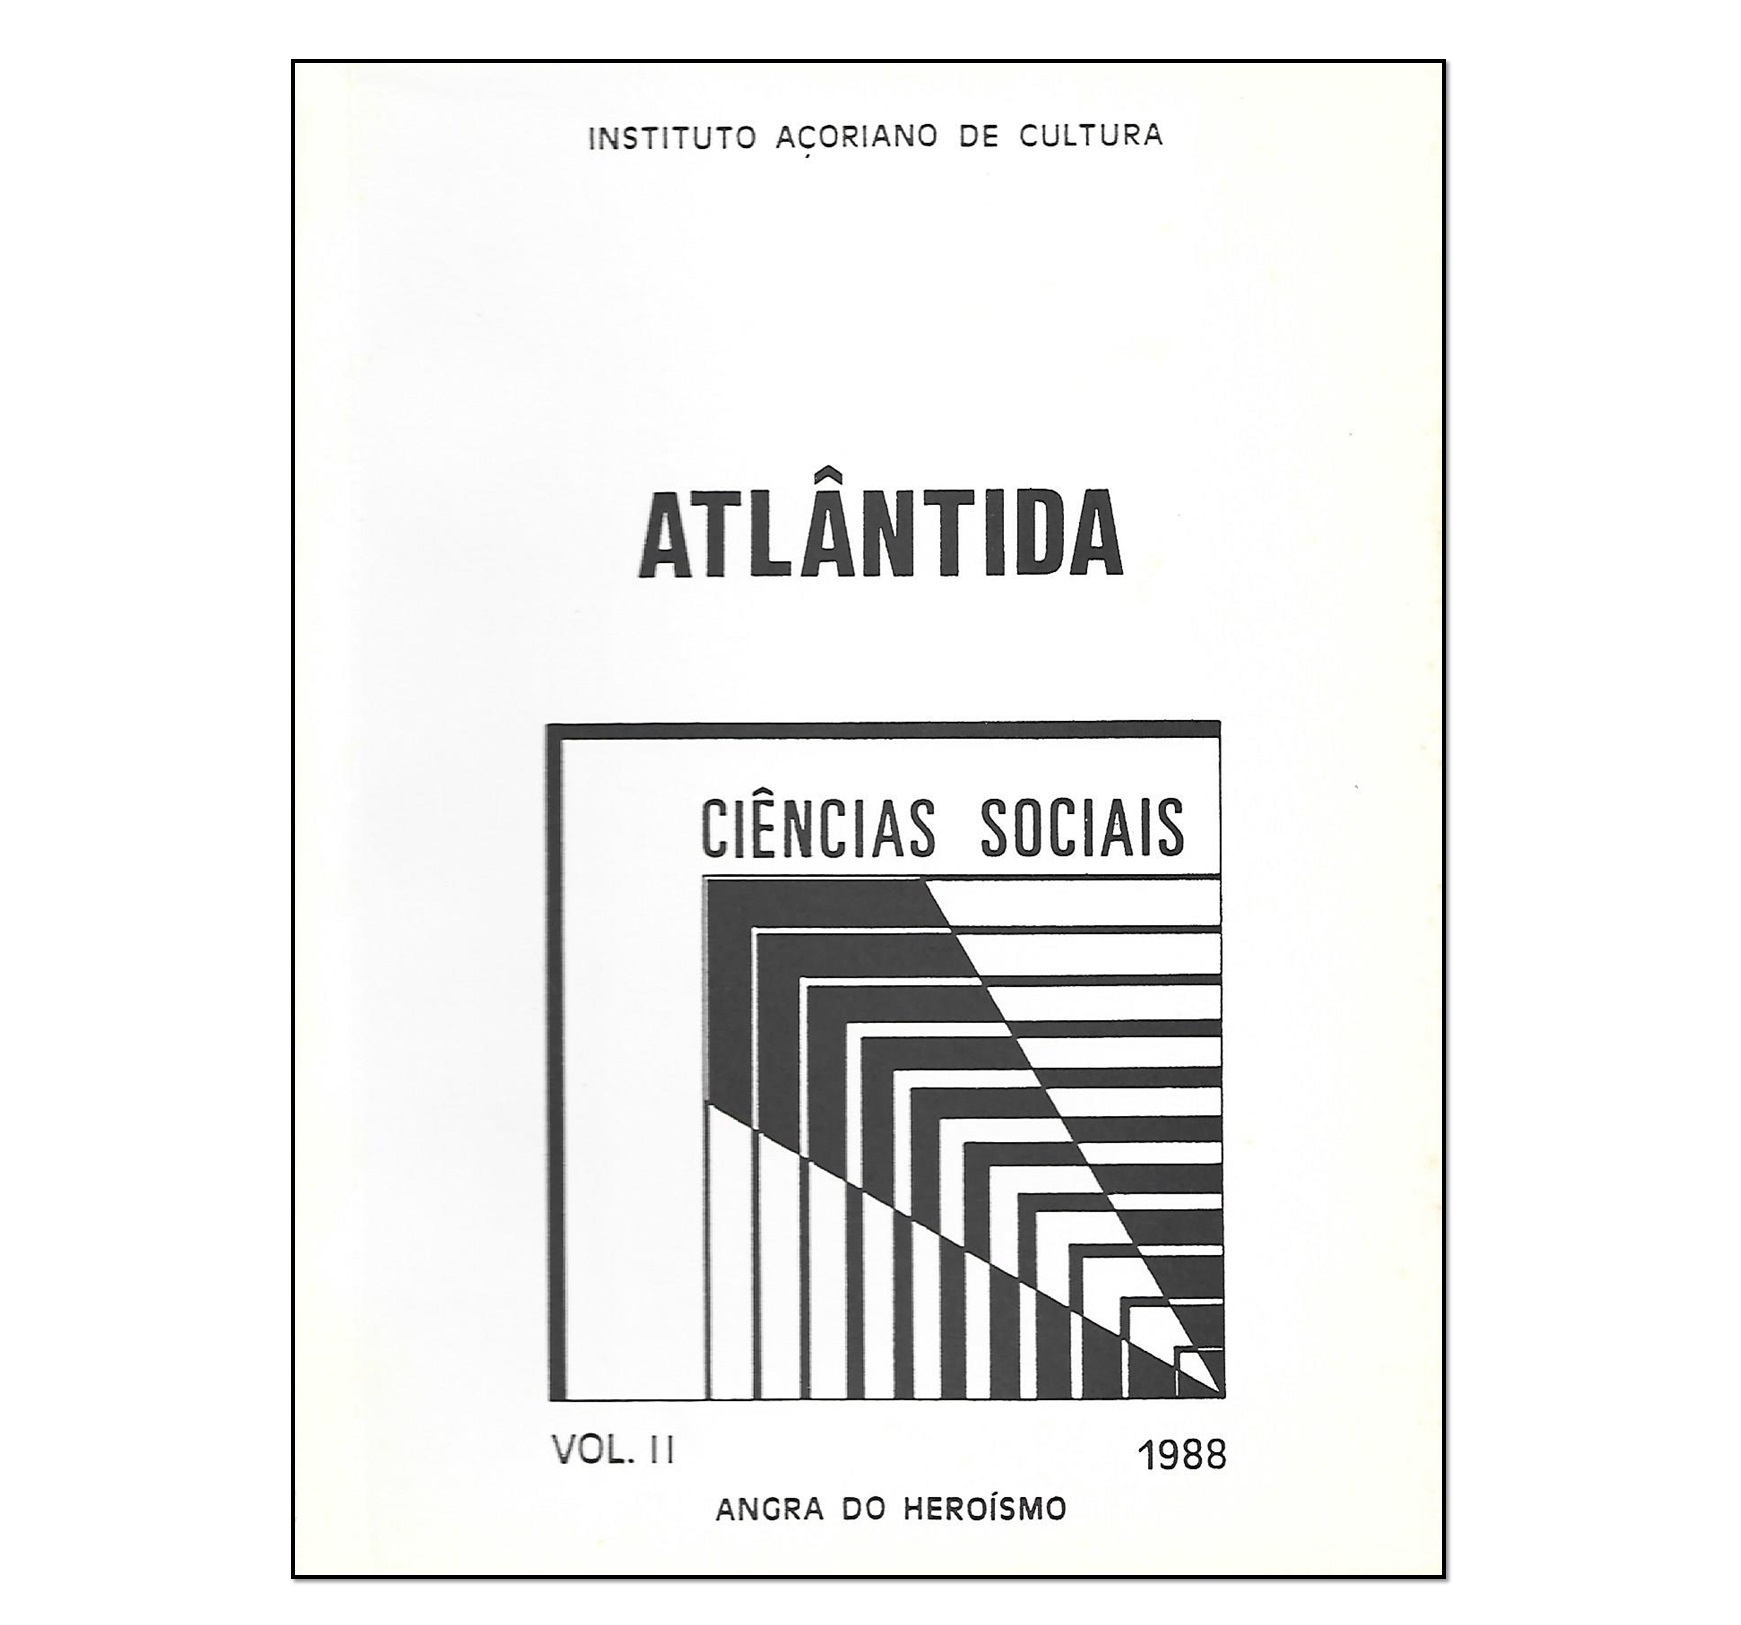 ATLÂNTIDA: CIÊNCIAS SOCIAIS. VOL. II, 1988.